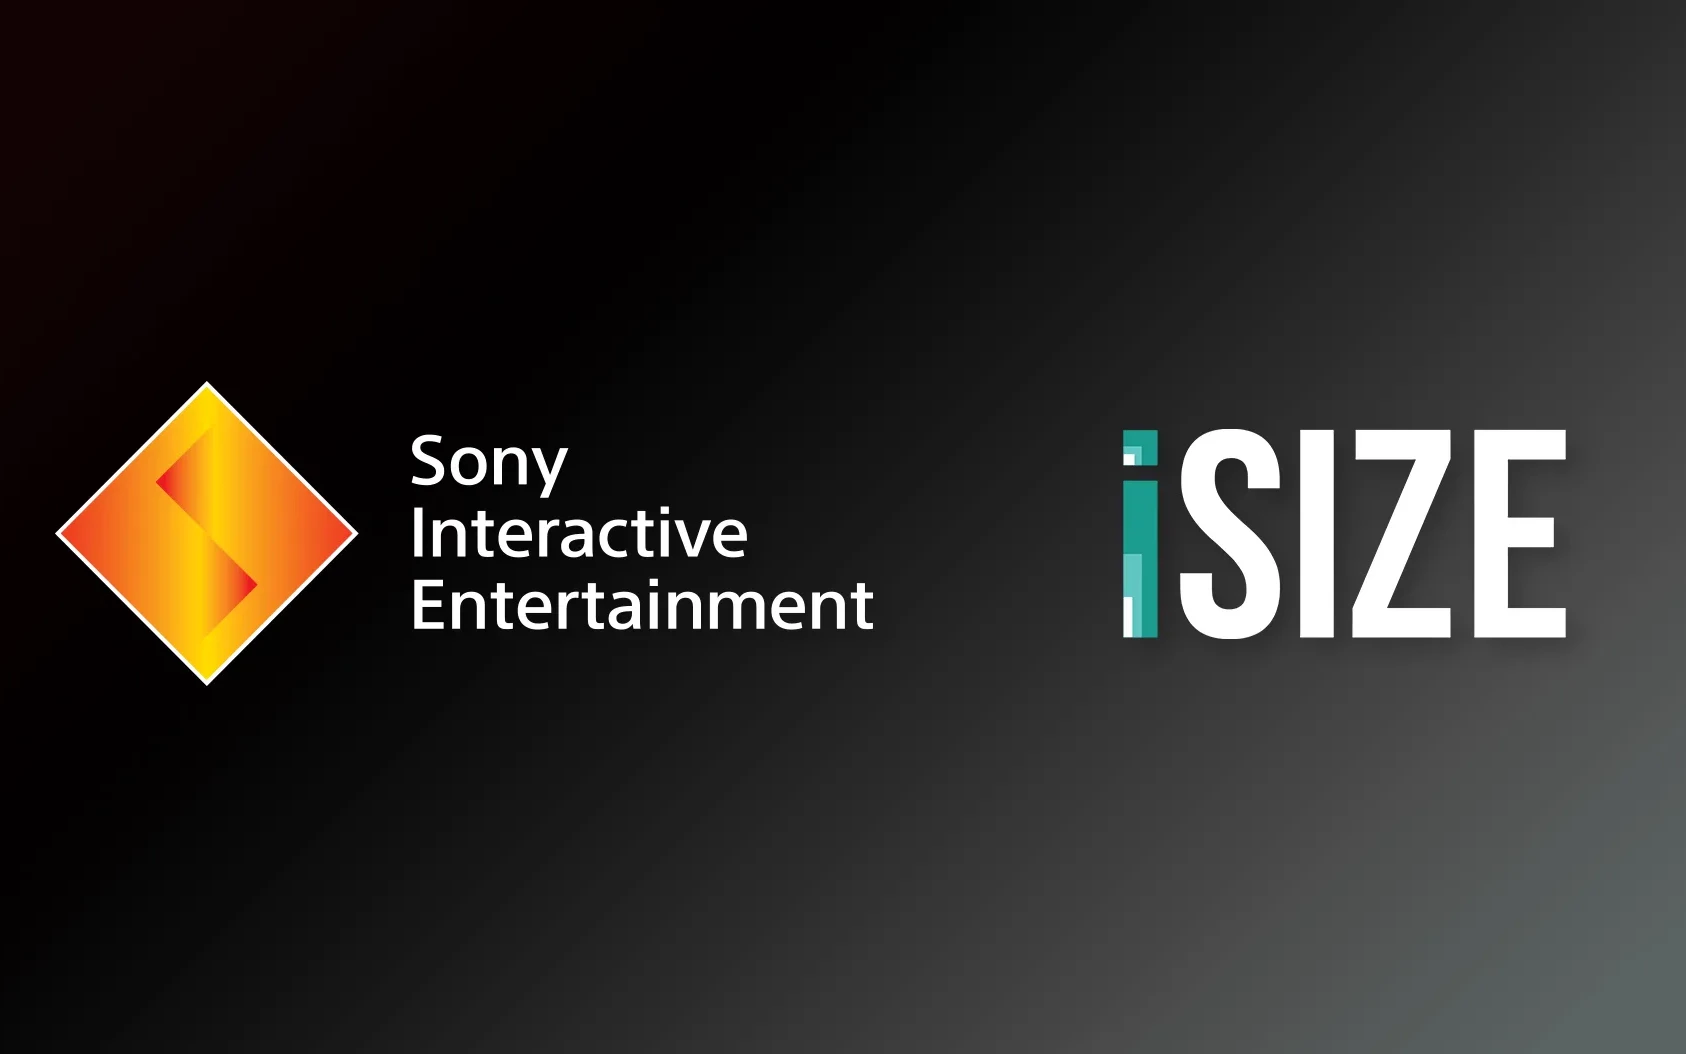 Sony Interactive Entertainment iSIZE